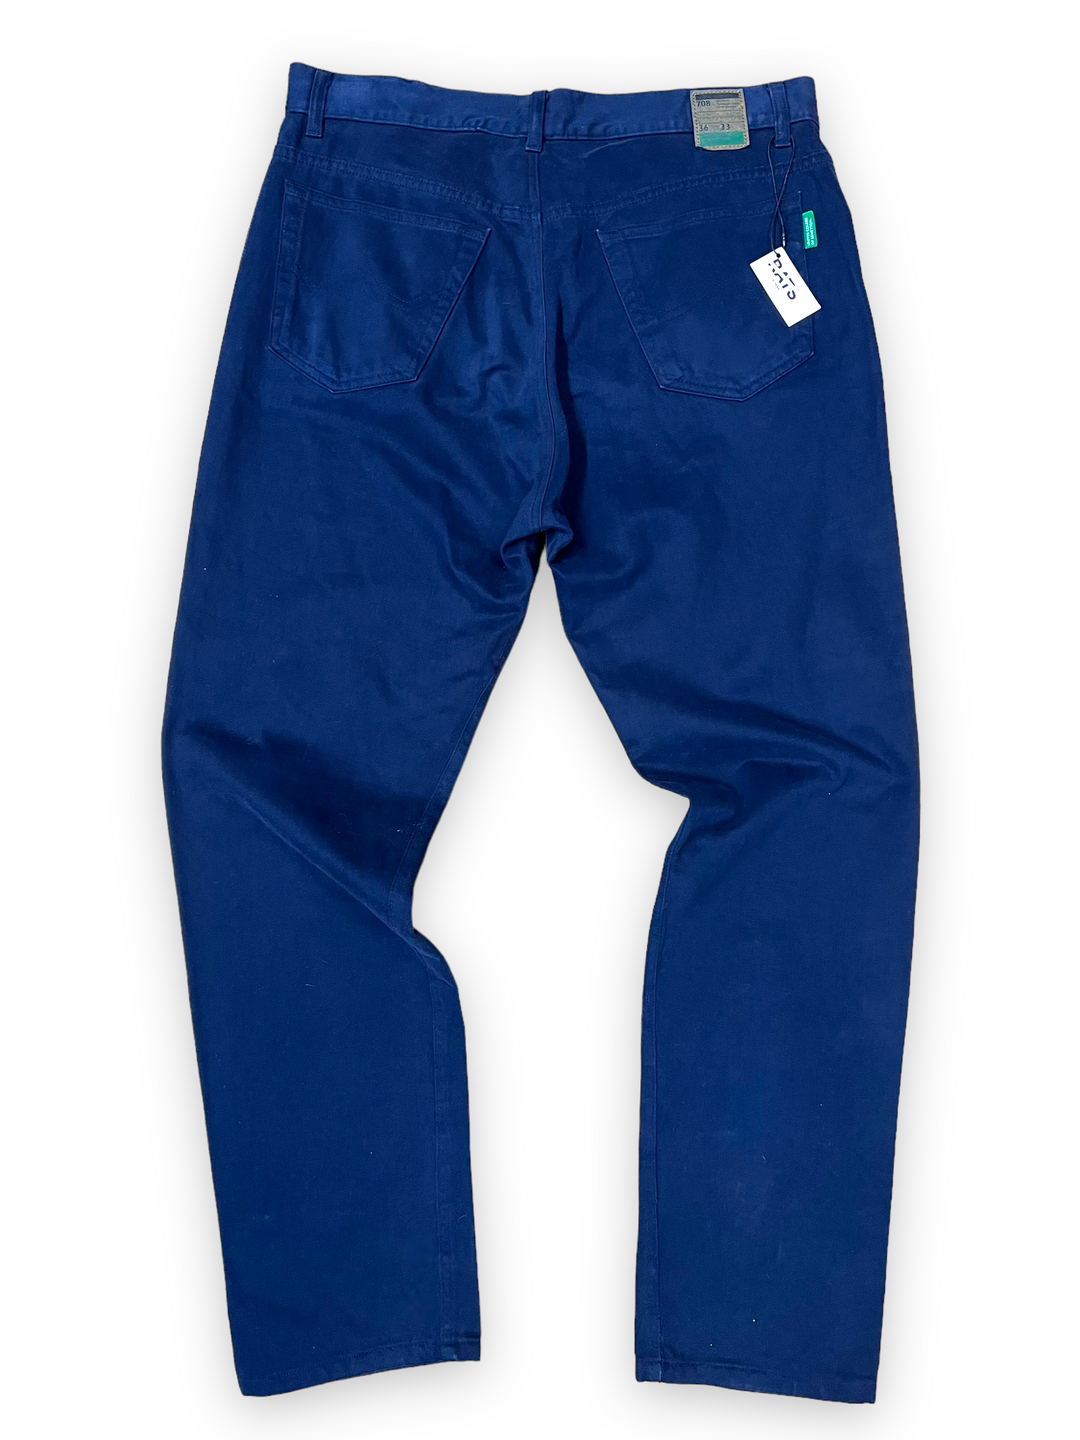 United Colors Of Benetton Pants Men's Large